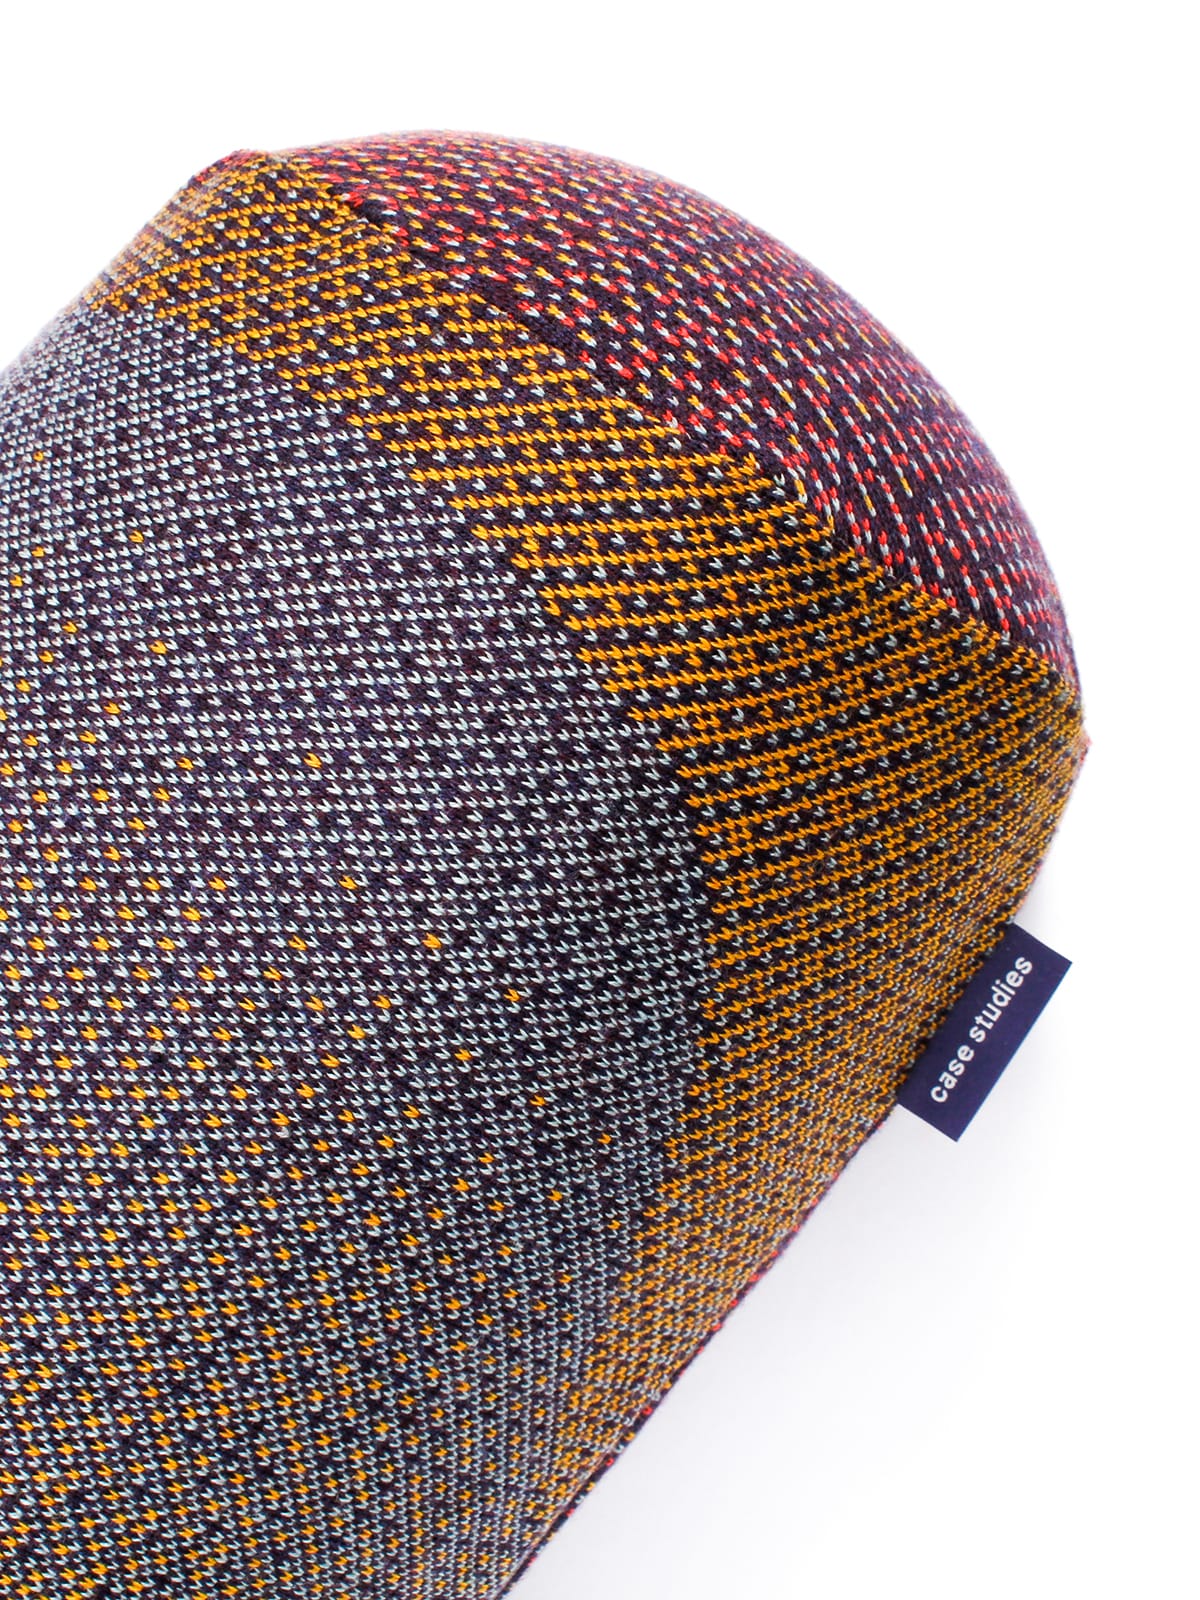 Knitted Bolster 20x70 Musselshell - Merino Wool detail